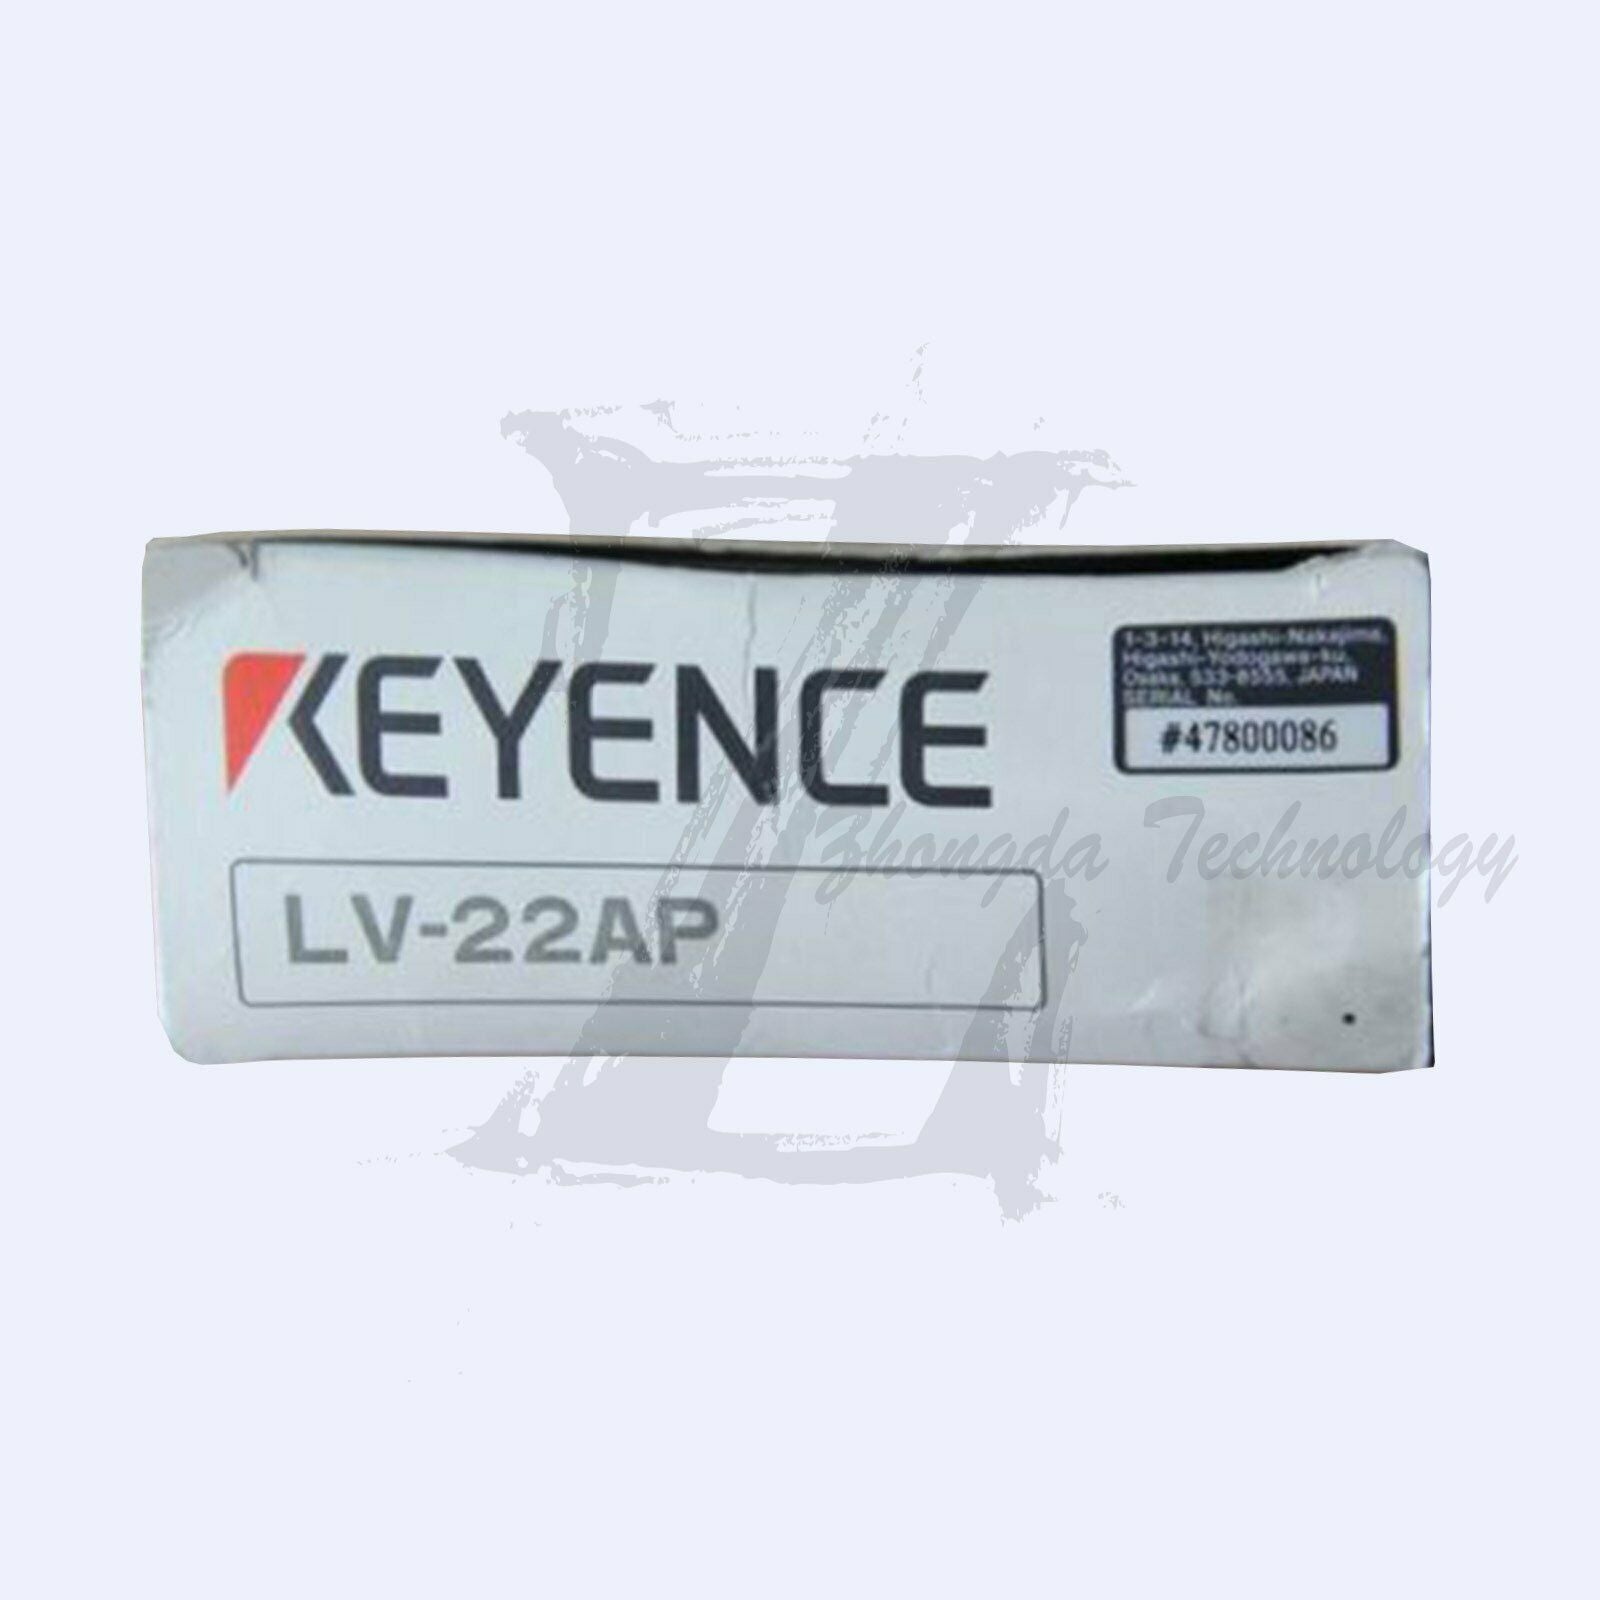 1pcs NEW KEYENCE LV-22AP laser sensor KOEED 201-500, 90%, import_2020_10_10_031751, Keyence, Other, validate-product-description